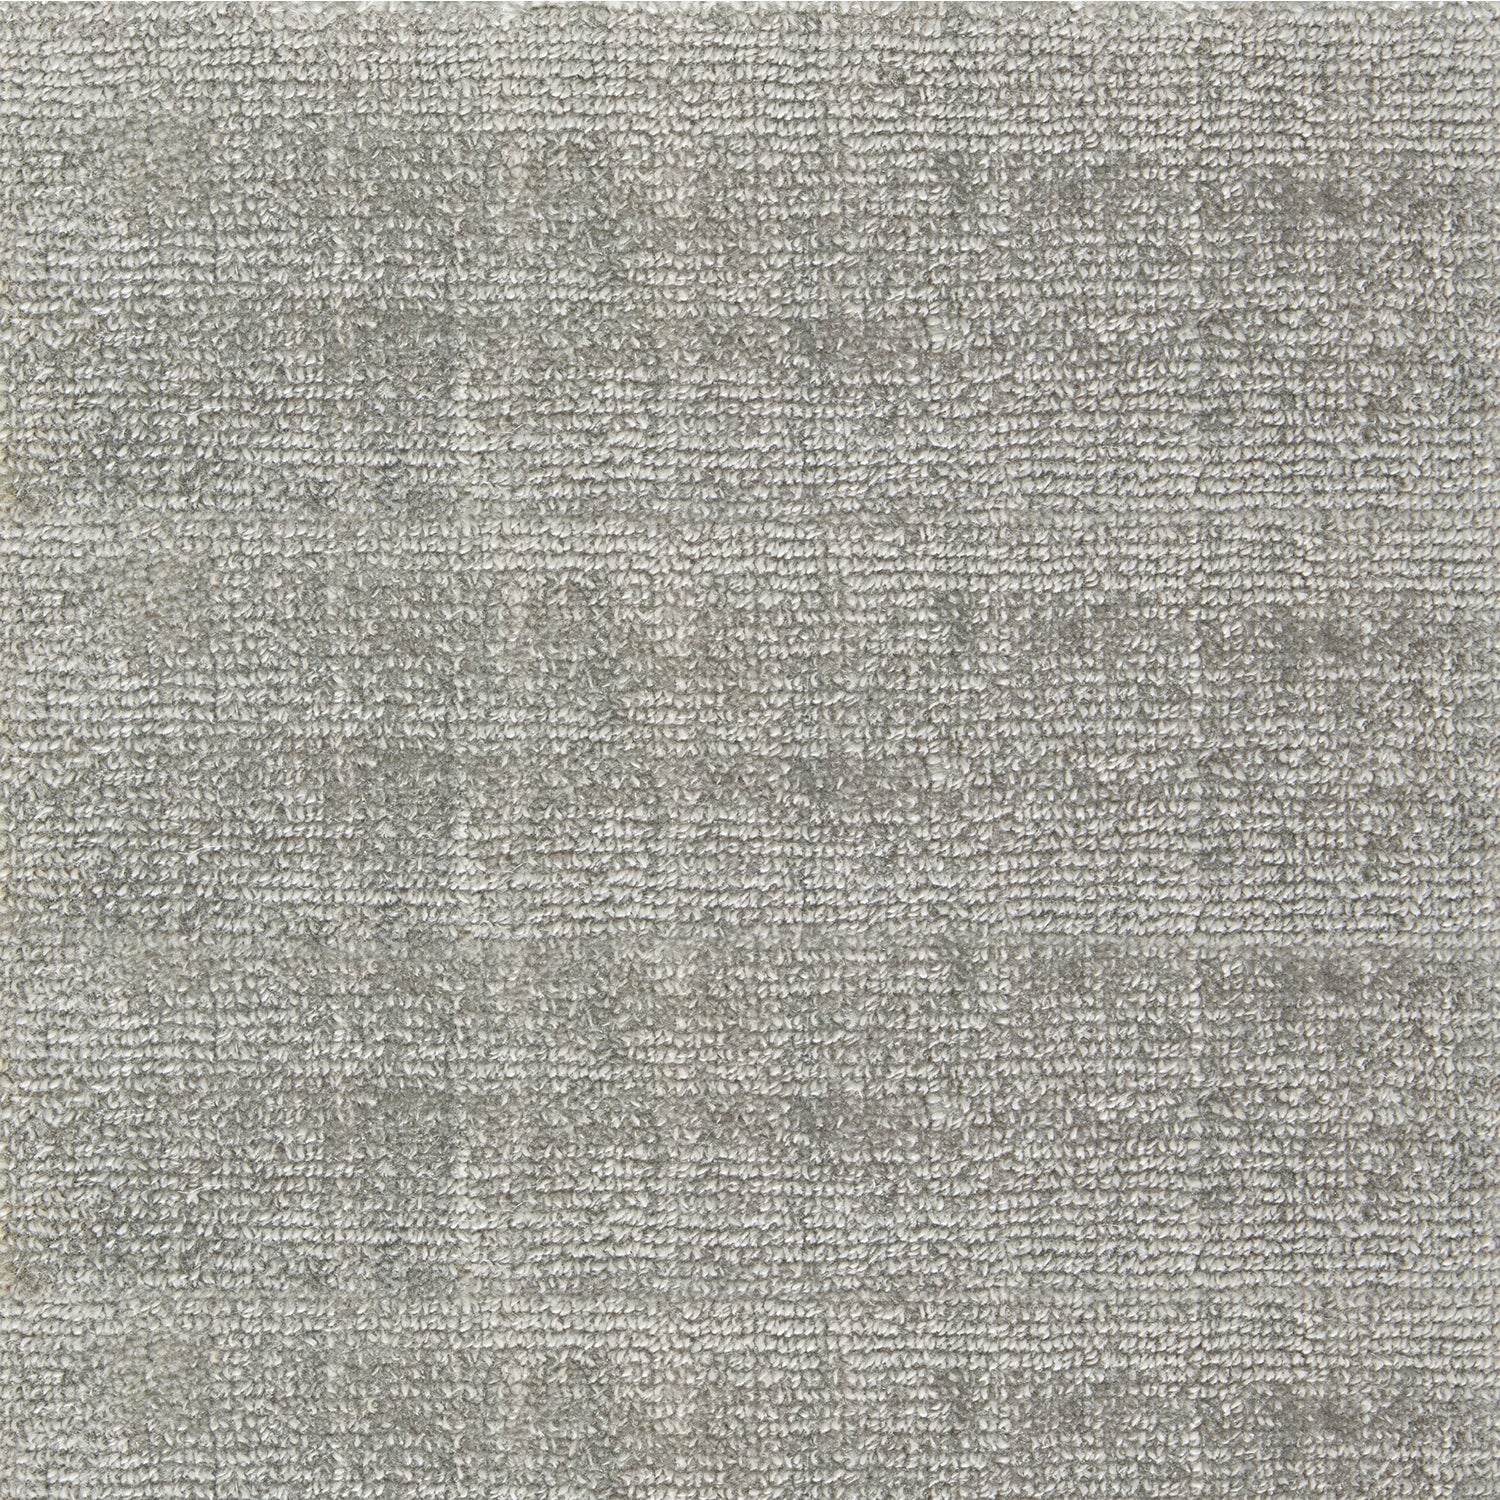 Nylon broadloom carpet swatch in a textured weave in gray.